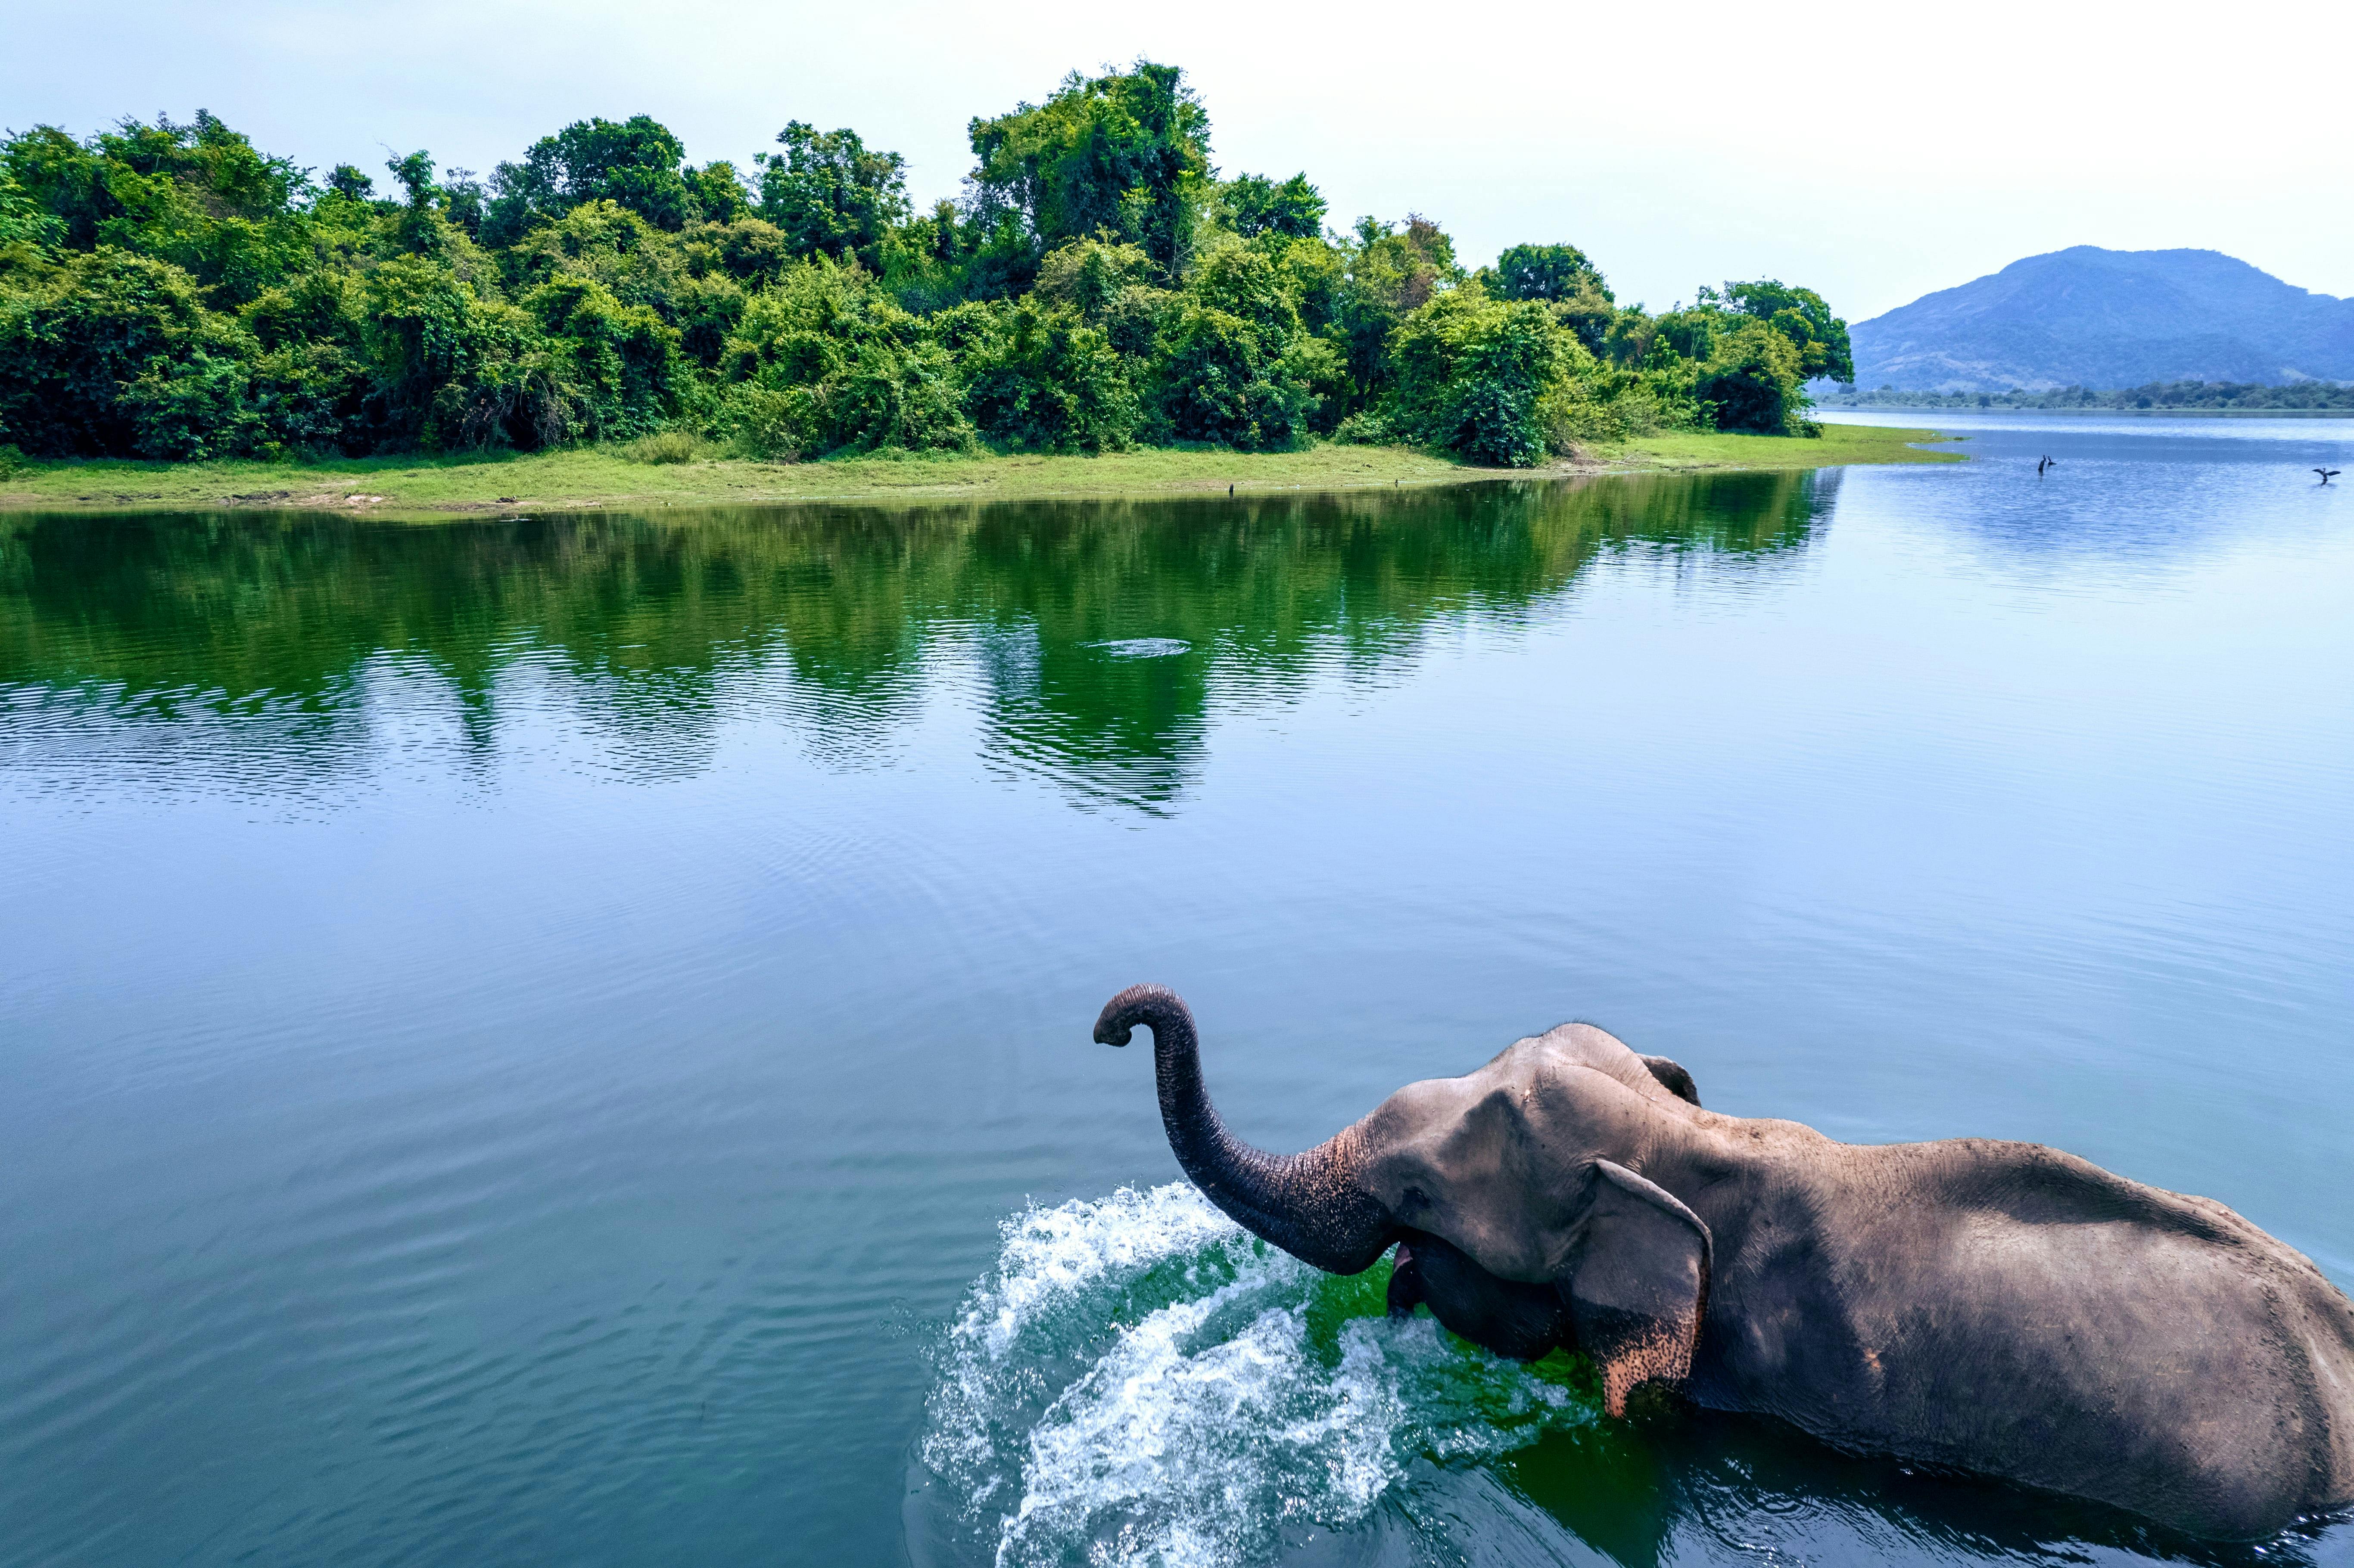 An elephant in Sri Lanka.